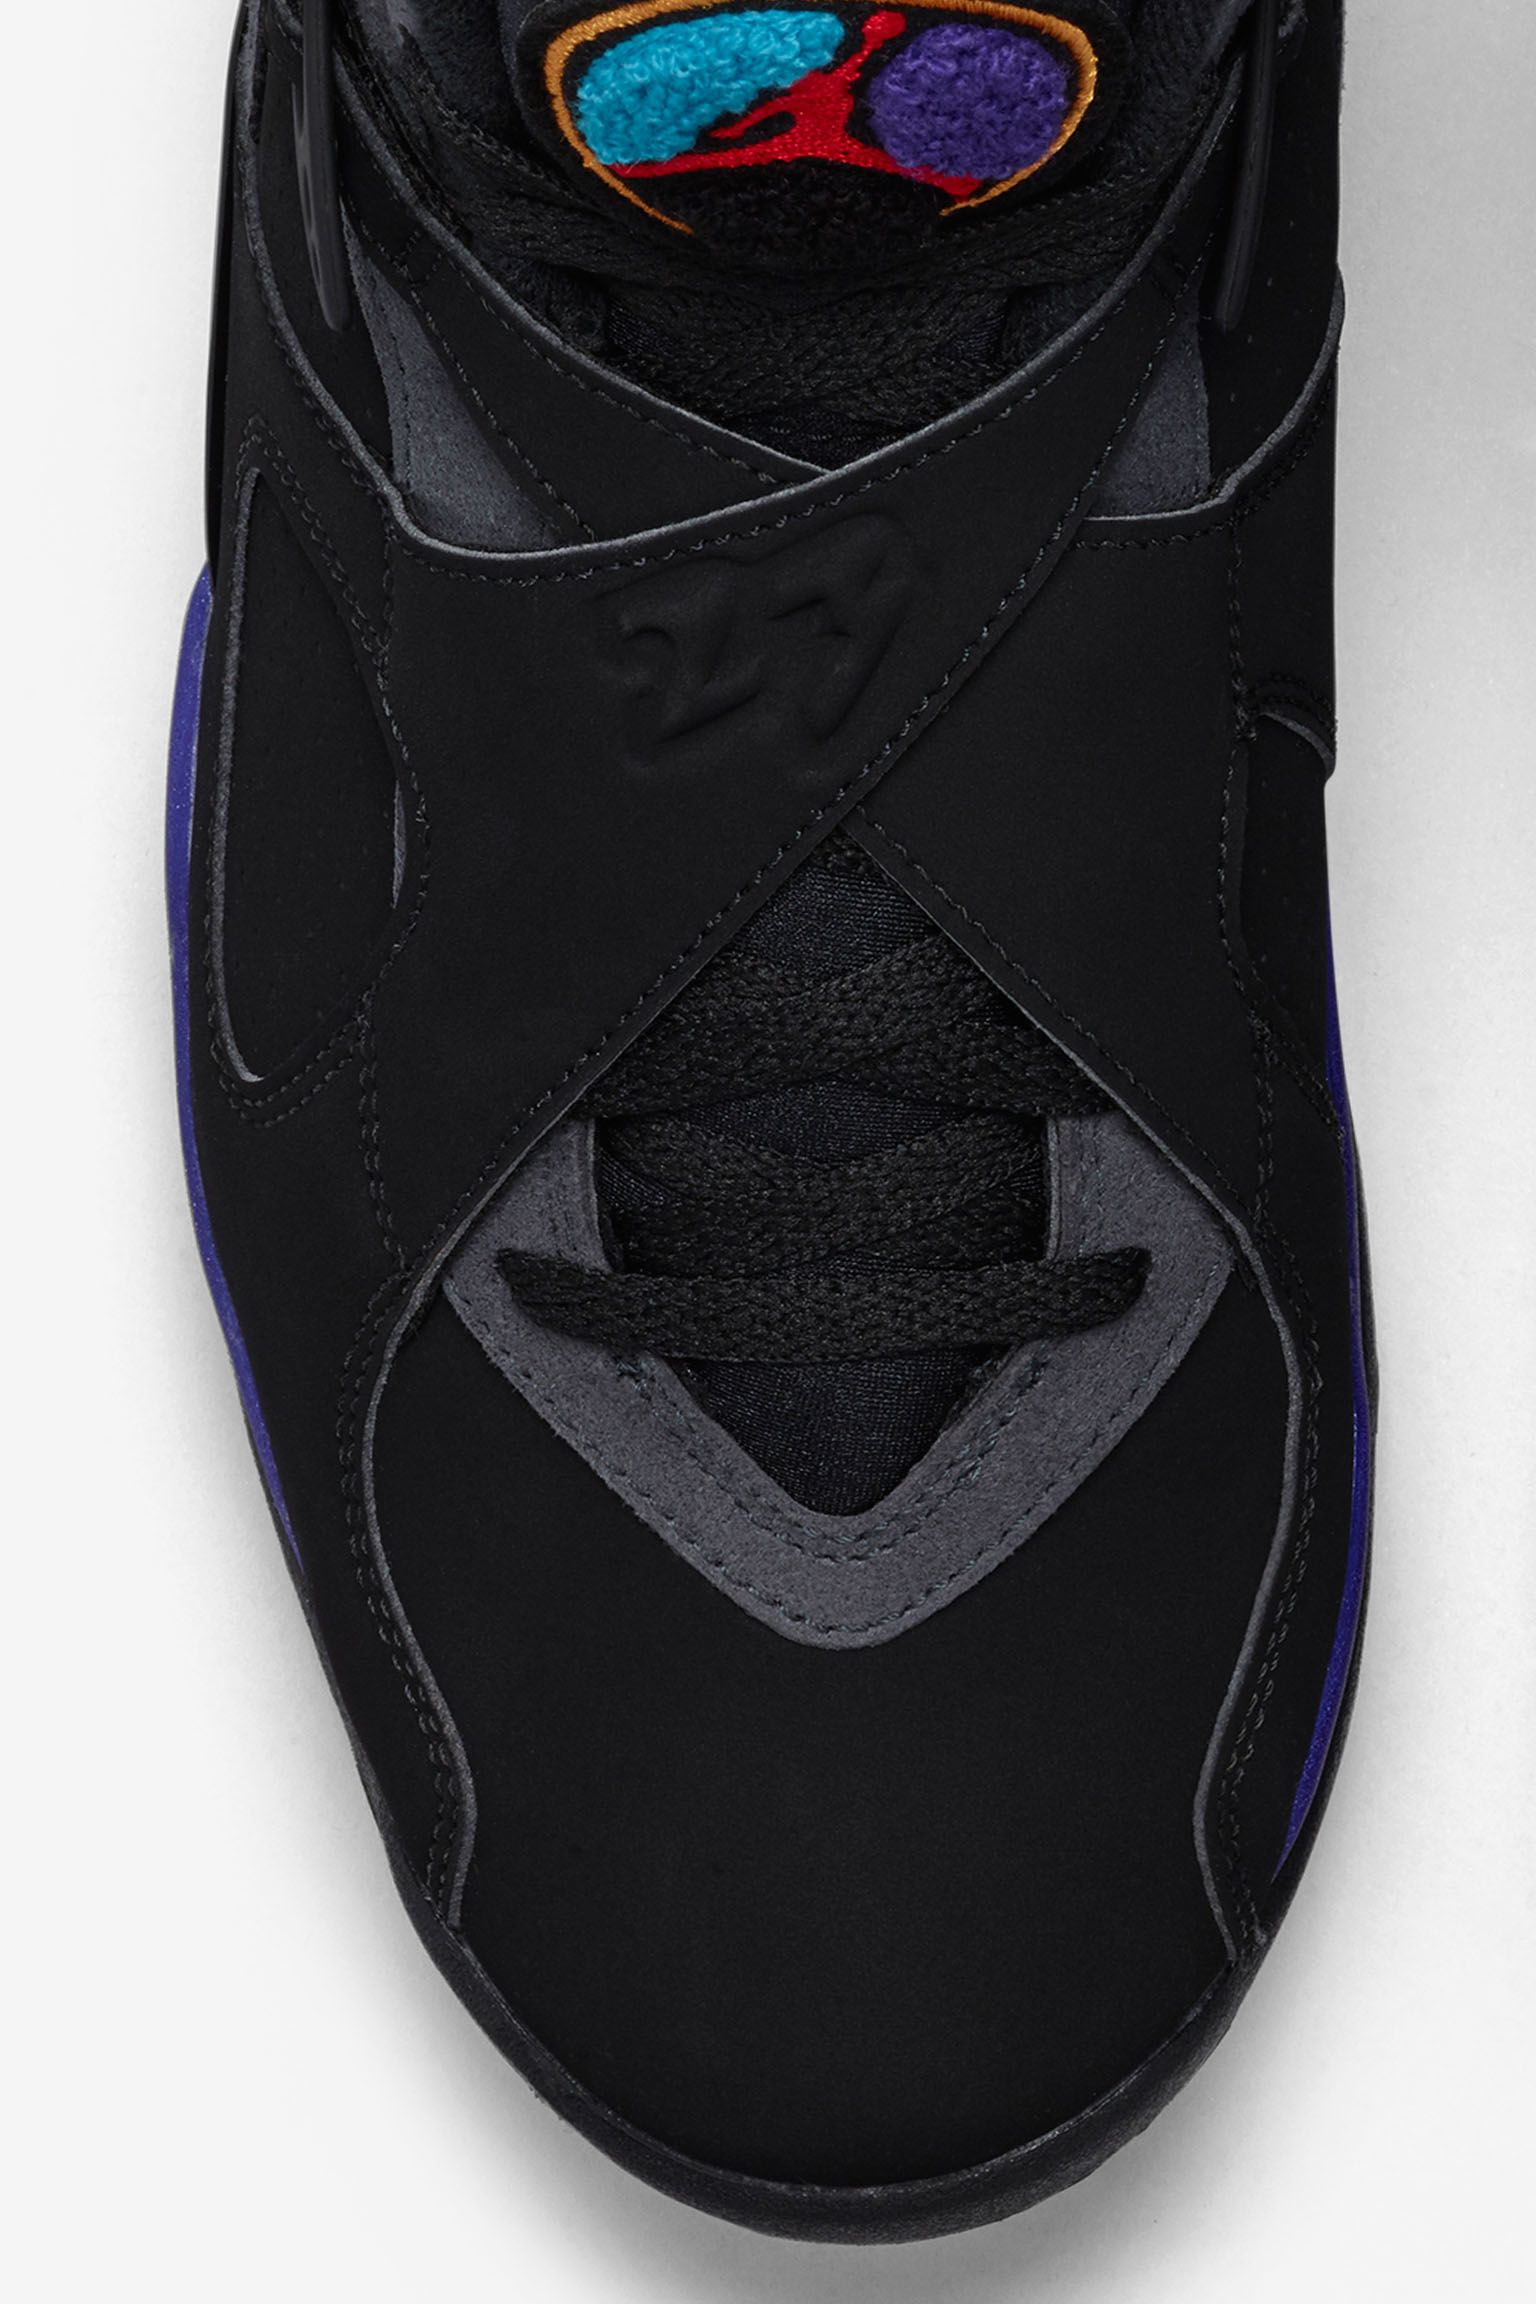 Intervenere lærebog Vellykket Air Jordan 8 Retro 'Aqua' Release Date. Nike SNKRS